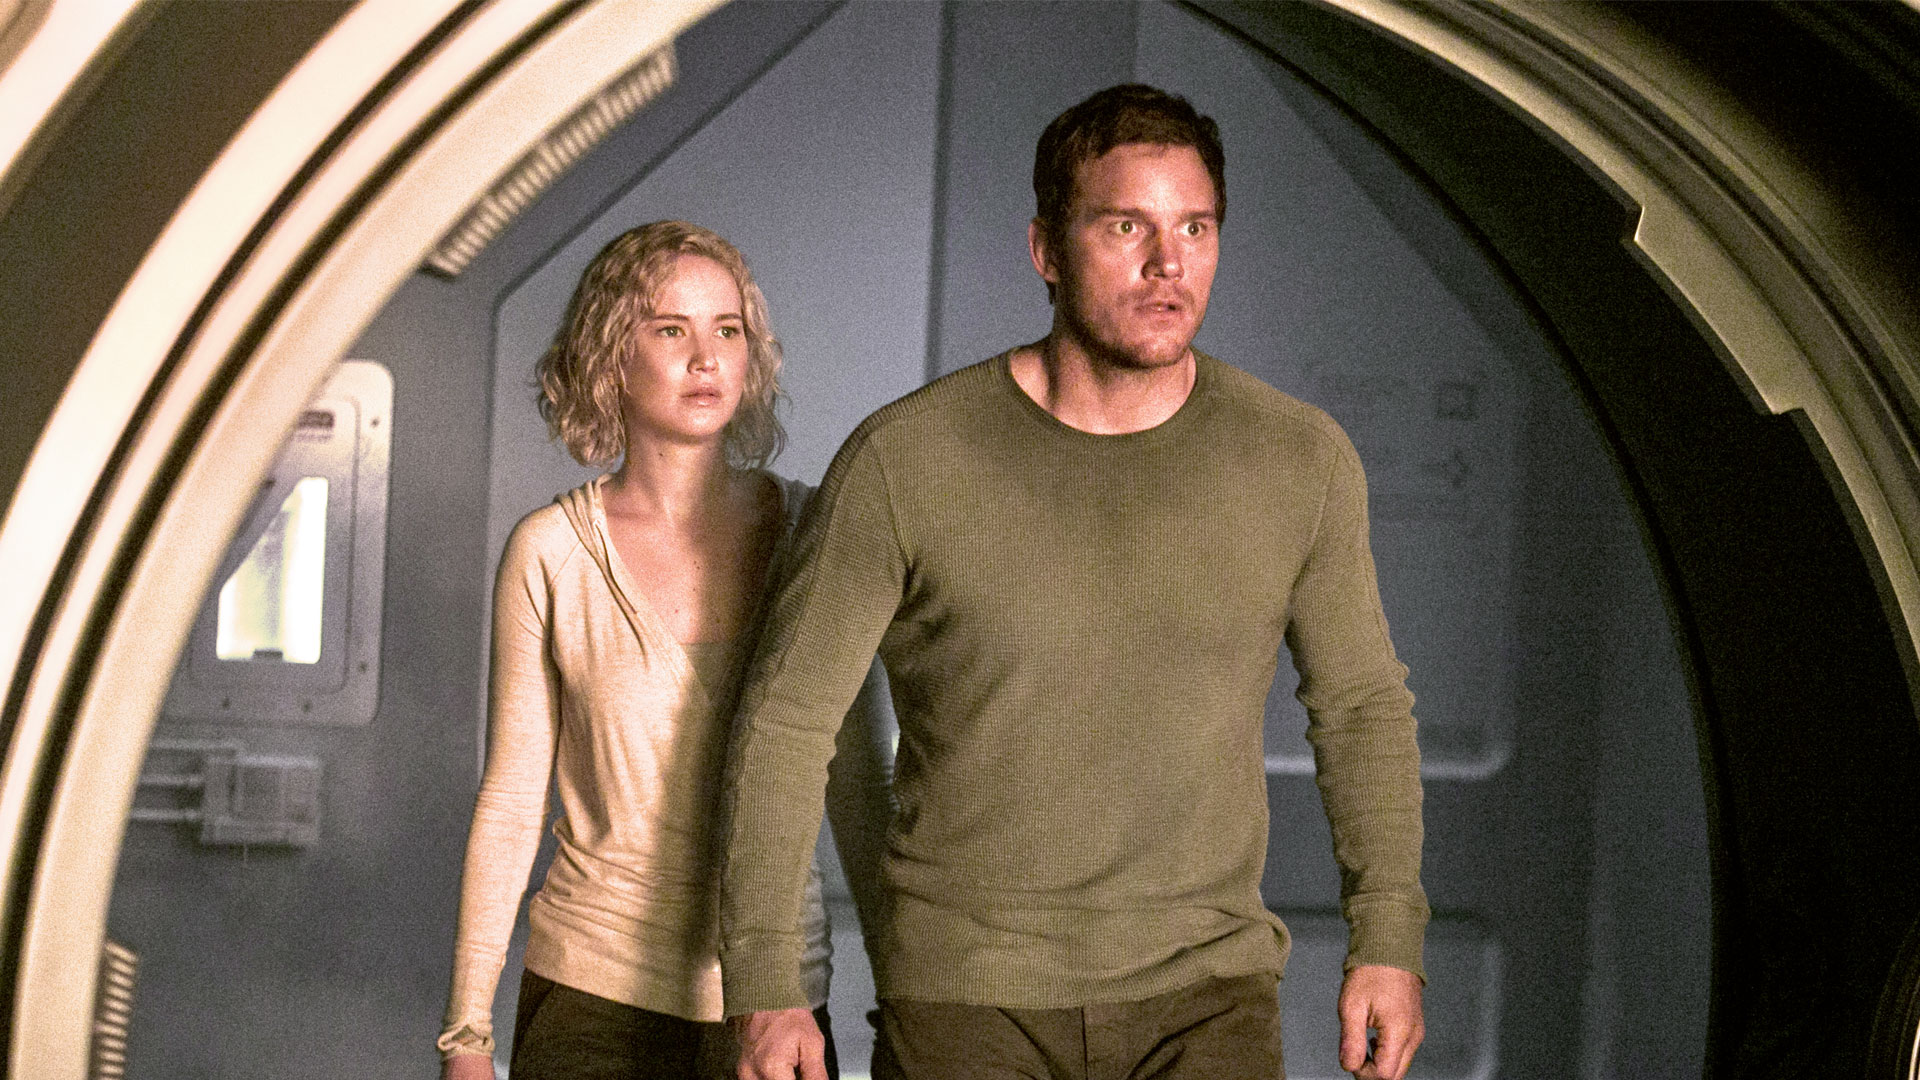 Jennifer Lawrence and Chris Pratt in talks for sci-fi movie Passengers